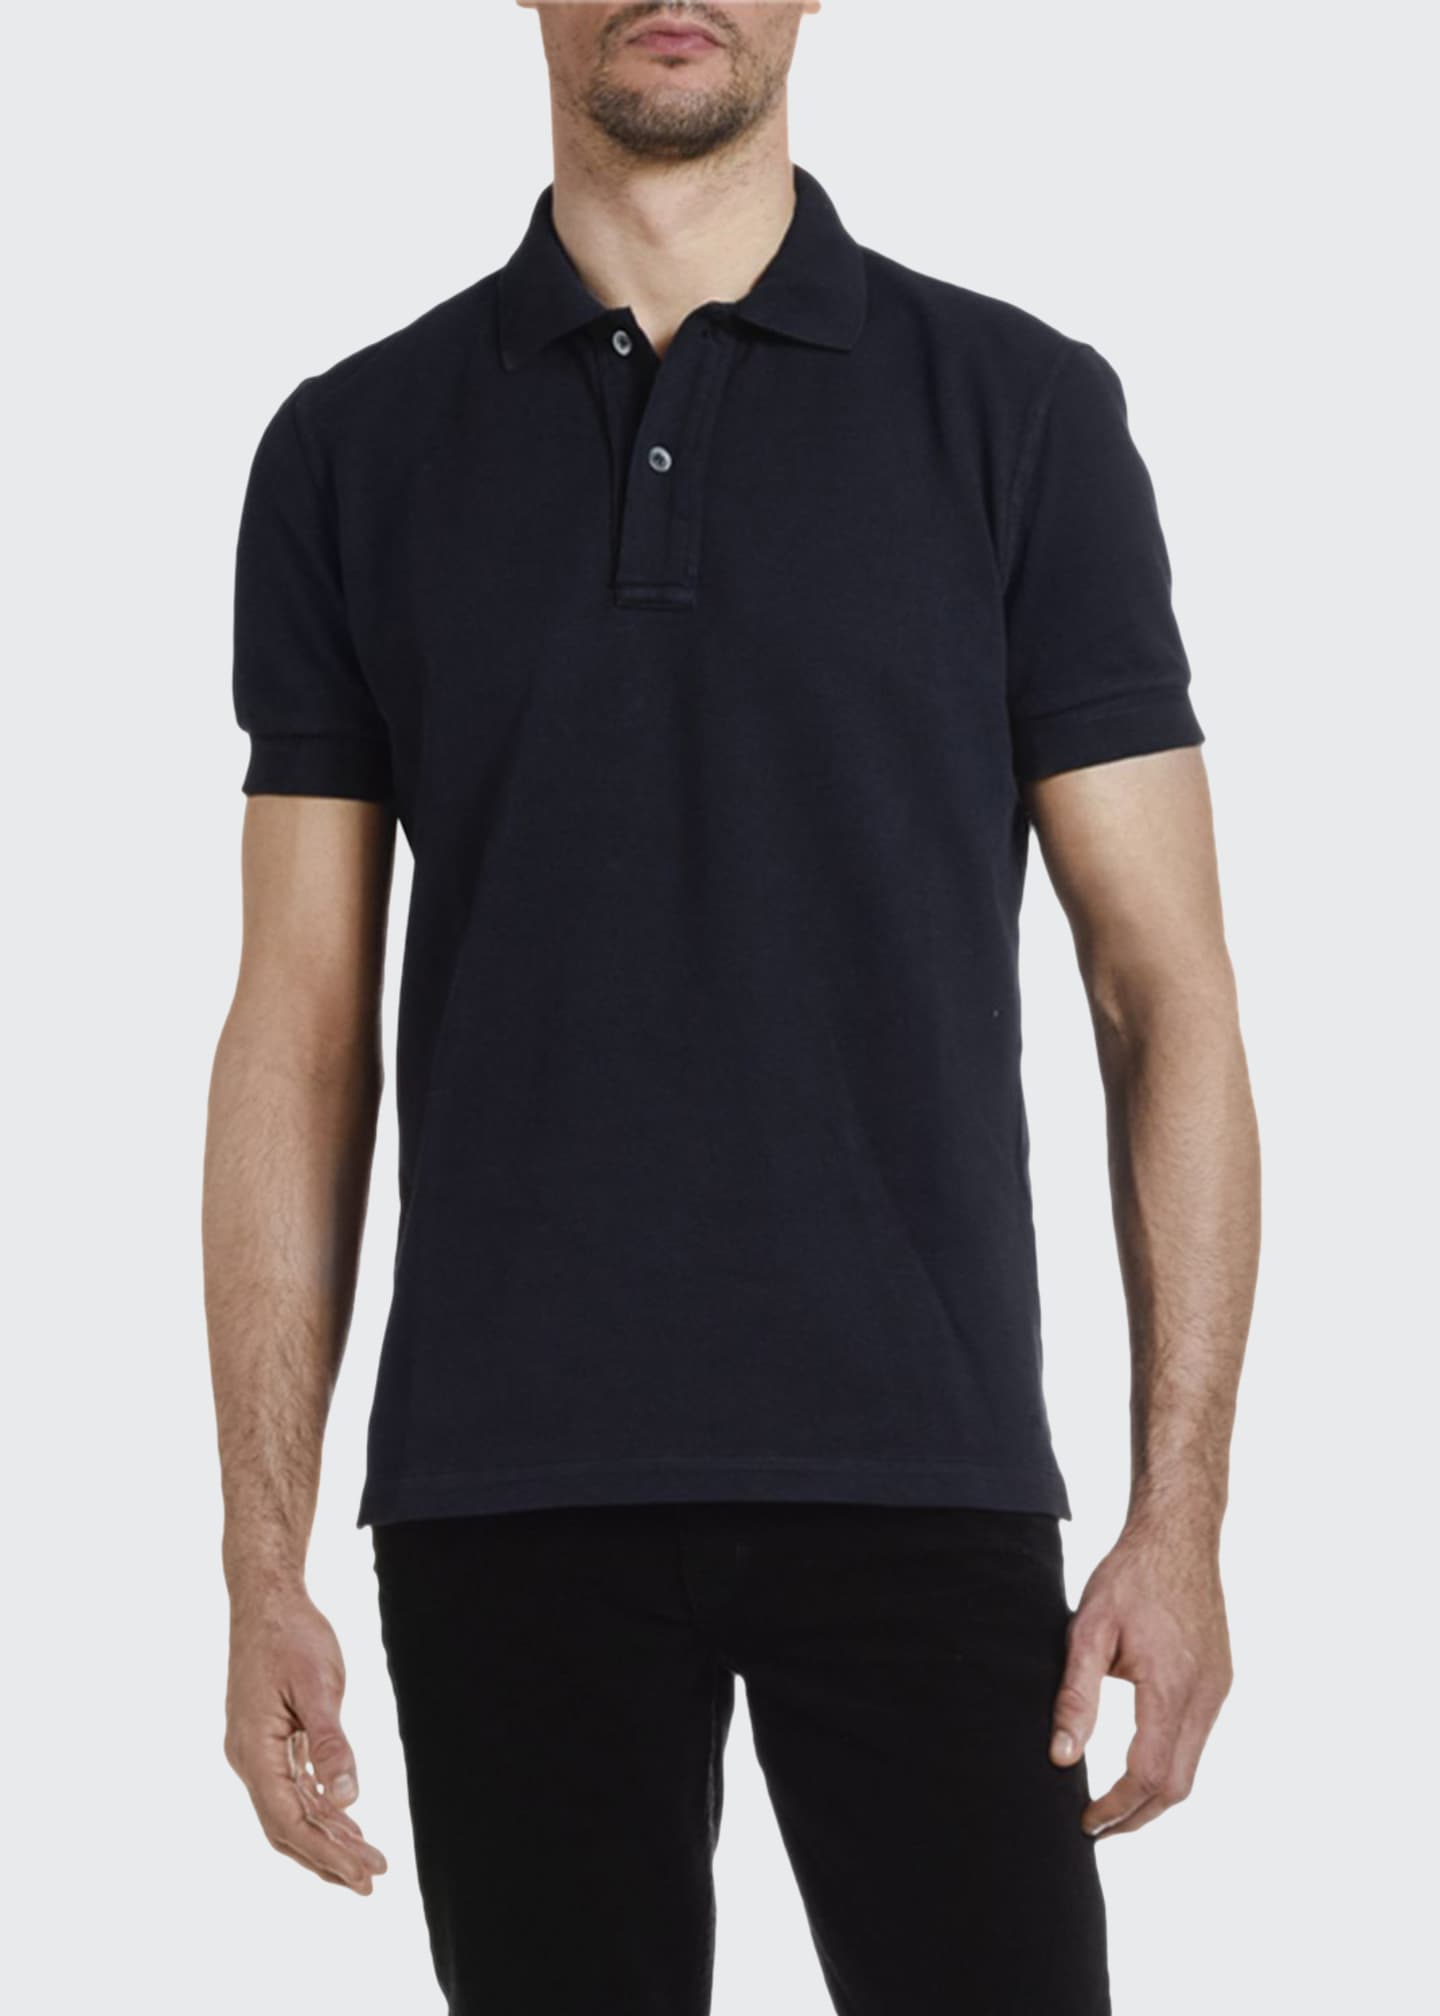 TOM FORD Men's Pique-Knit Polo Shirt, Blue - Bergdorf Goodman